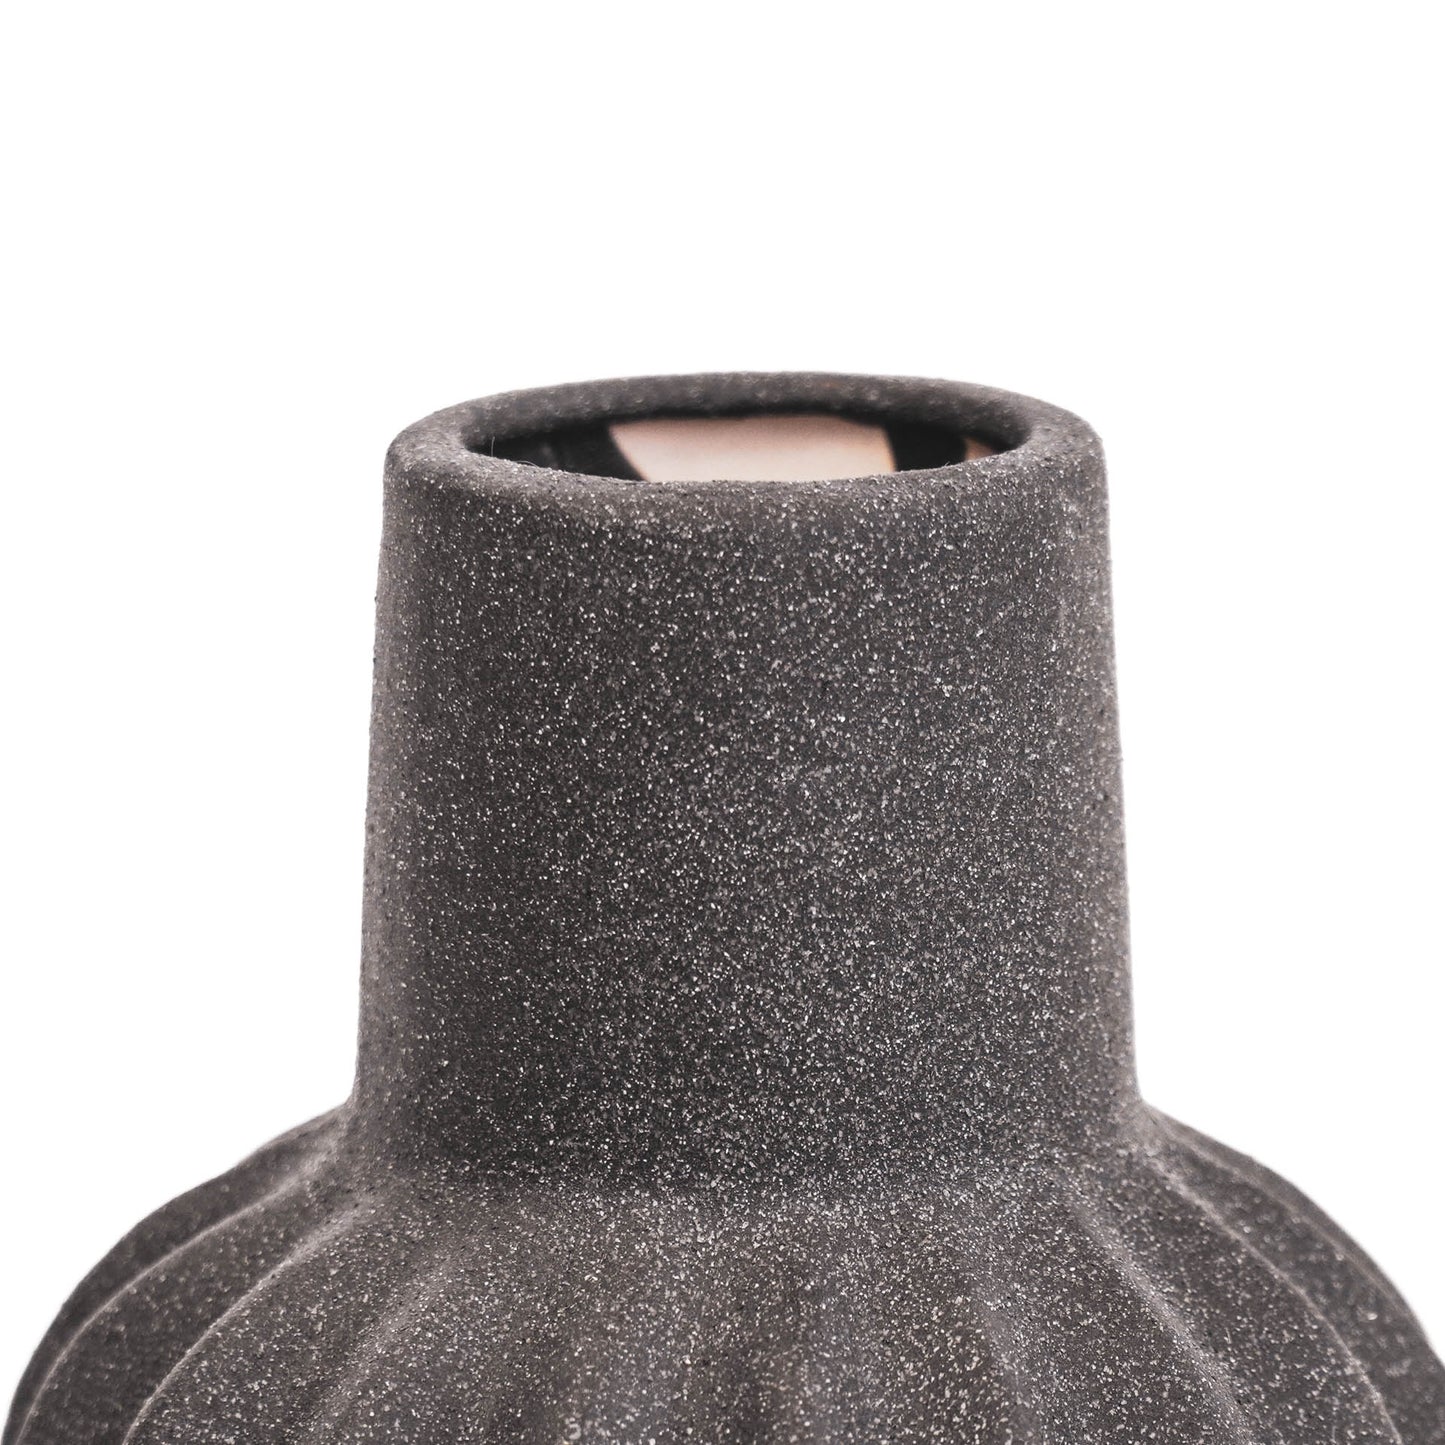 HV Organic Shape Vase - Black-13x13x20cm